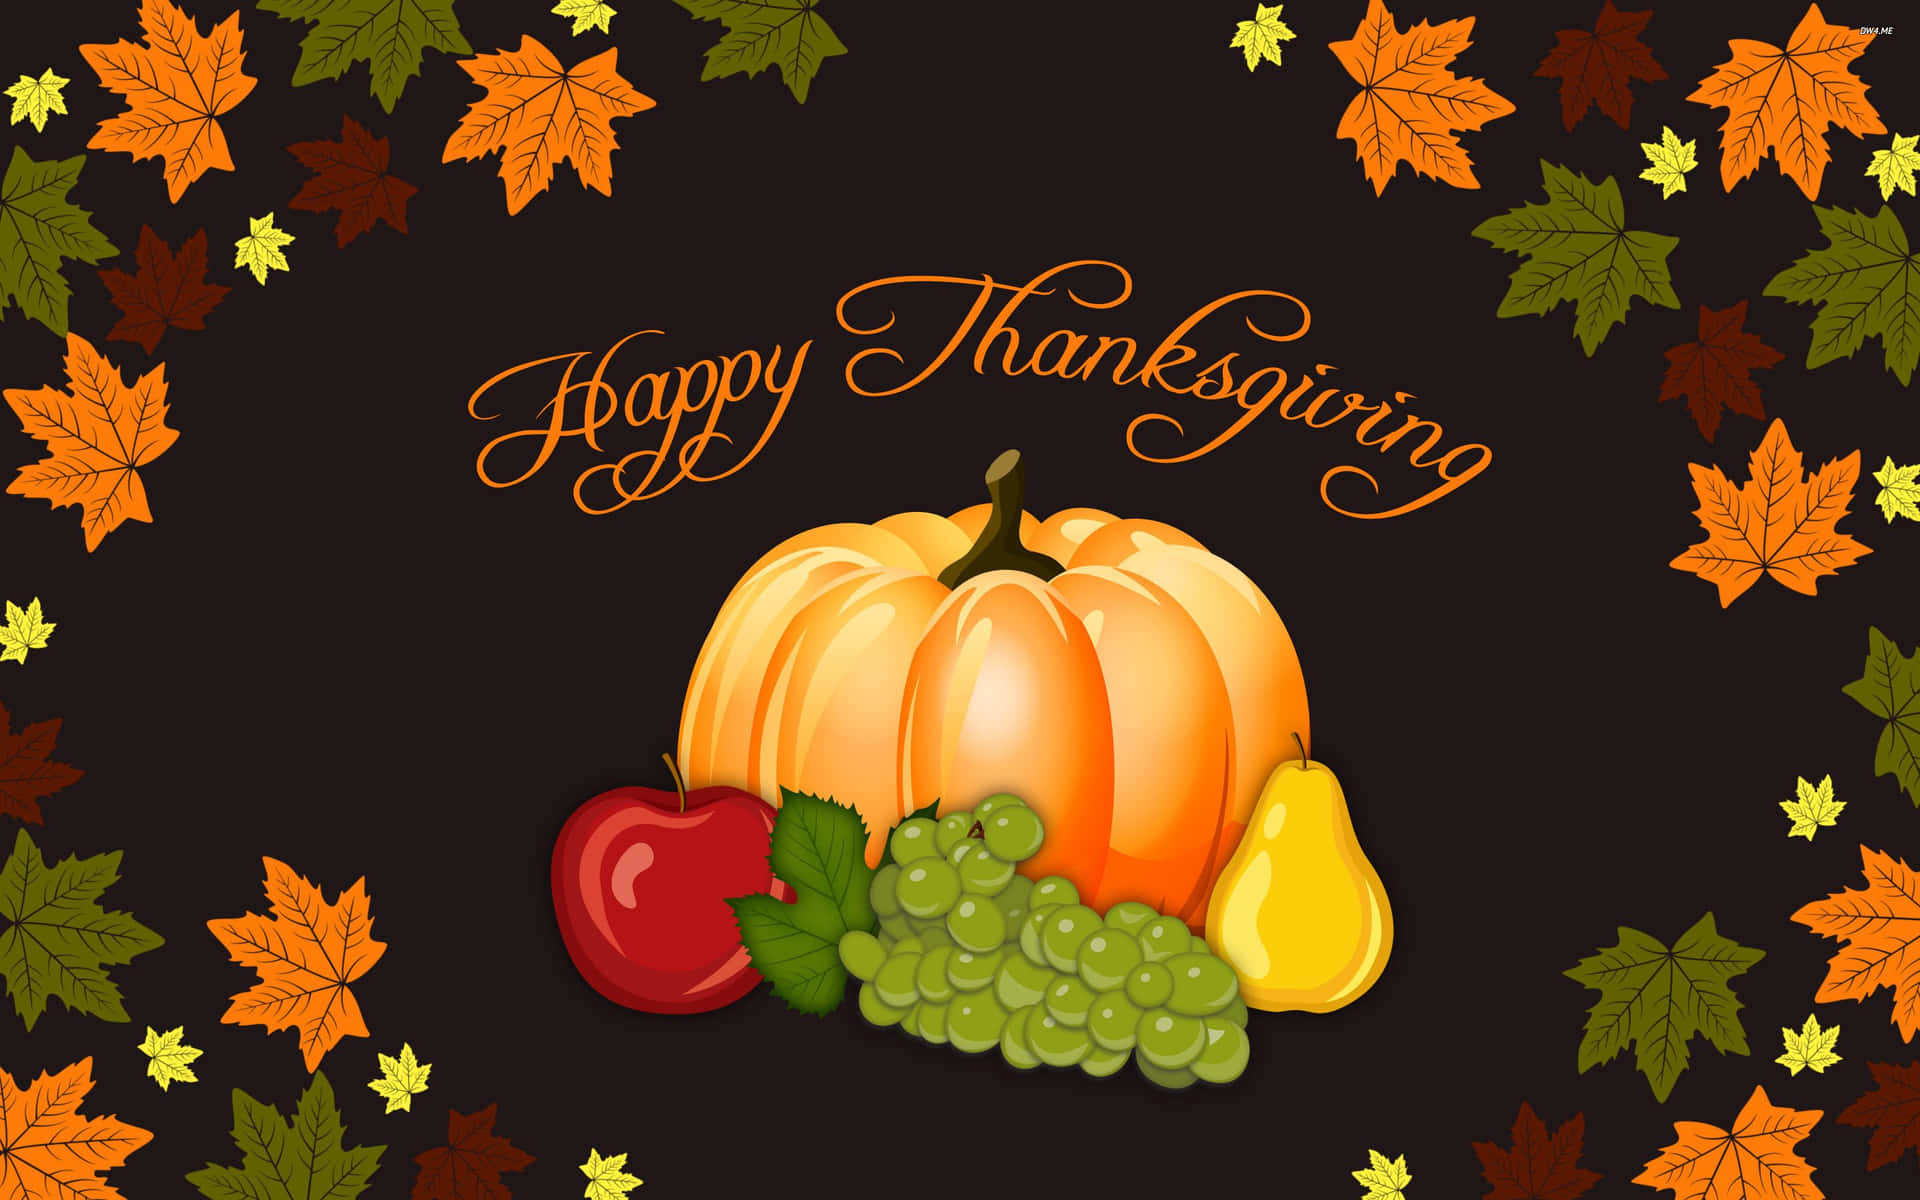 Let us give thanks this Thanksgiving season! Wallpaper